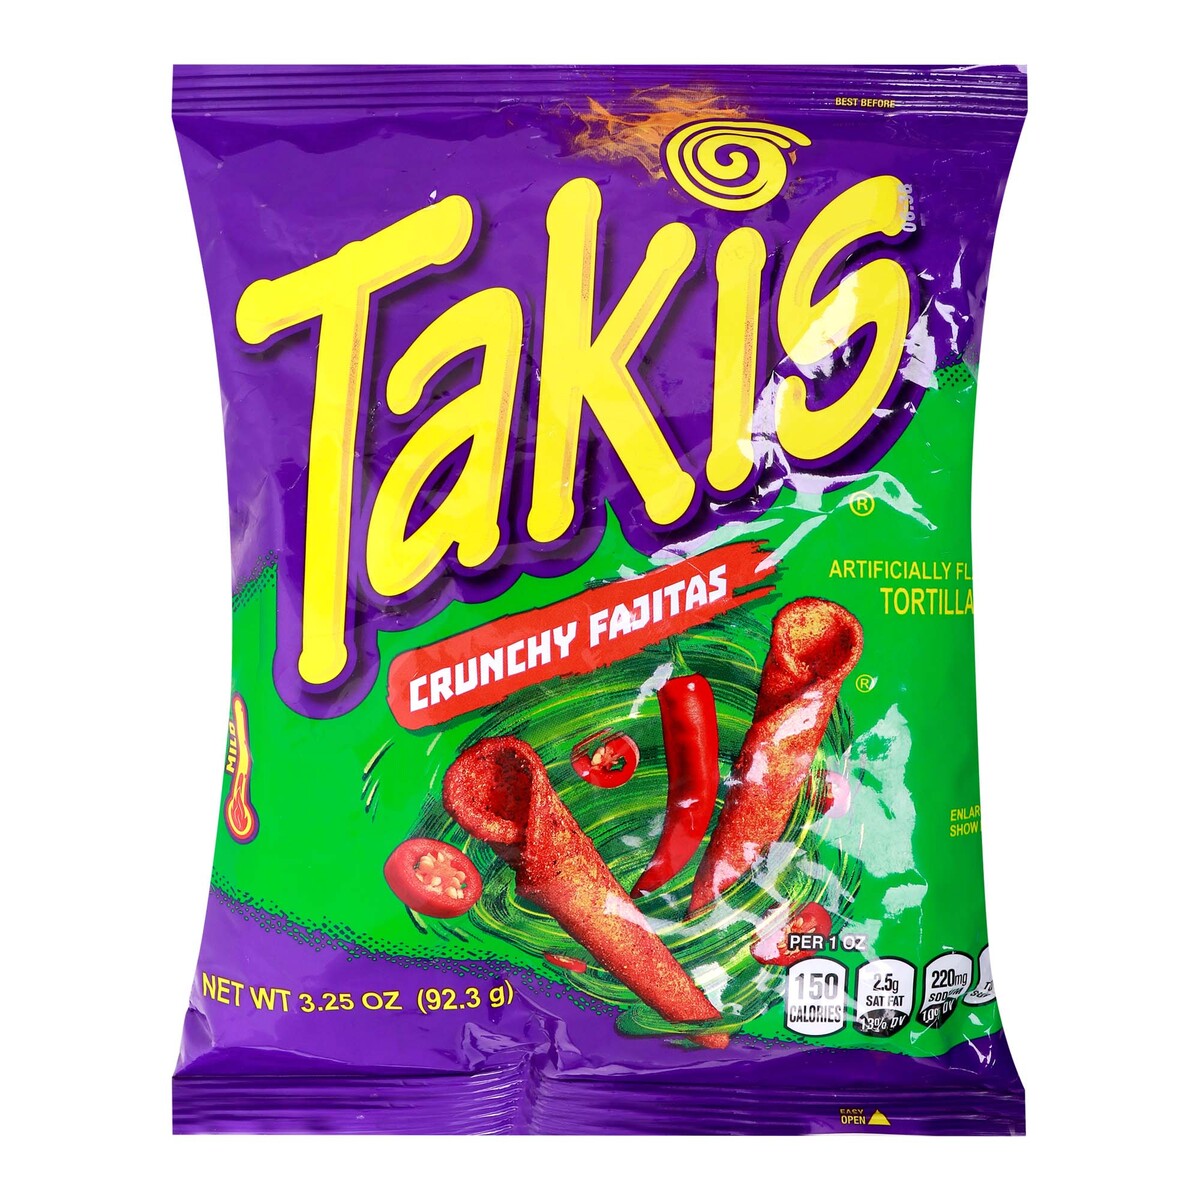 Takis Crunchy Fajitas Artificially Flavoured Tortilla Chips 92.3 g